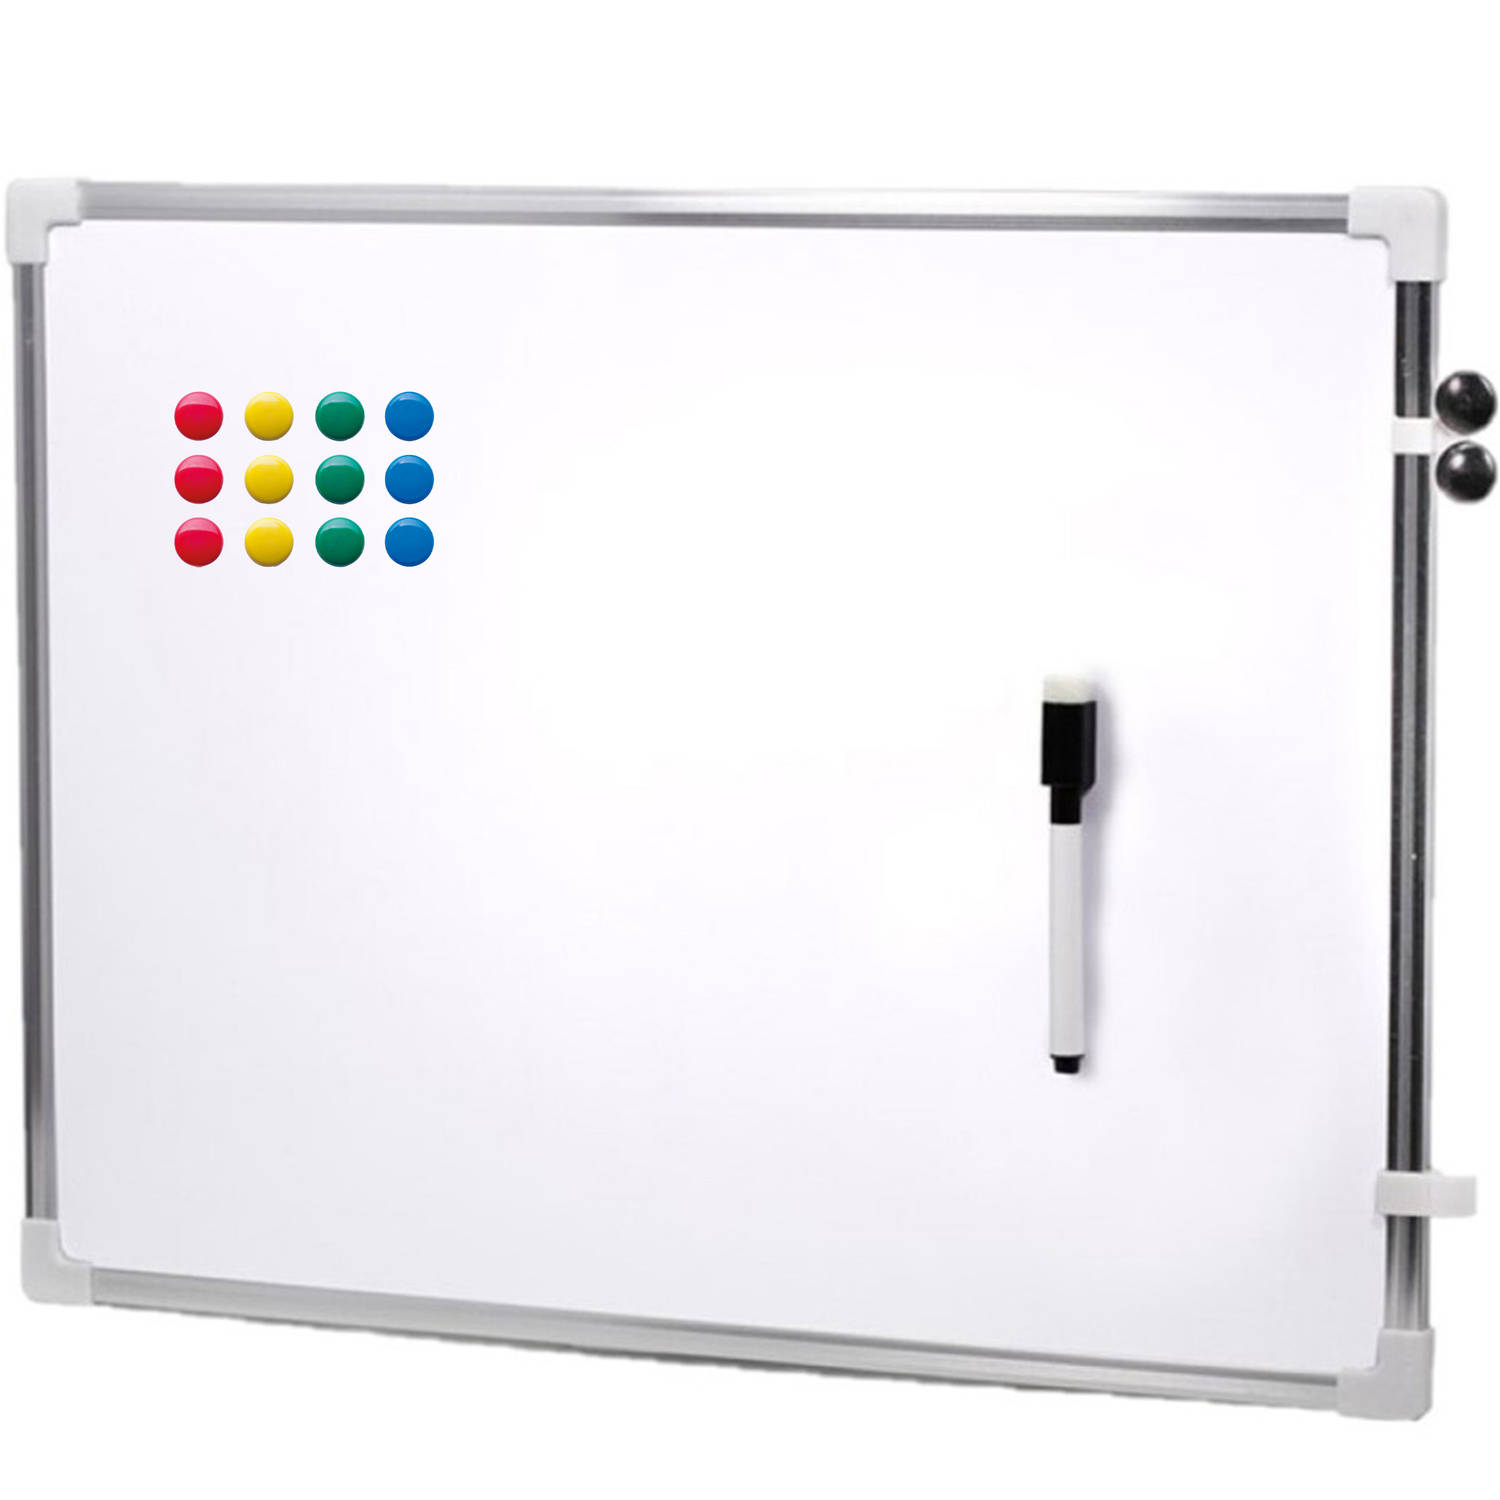 Magnetisch whiteboard met marker-12x magneten gekleurd 80 x 60 cm Whiteboards